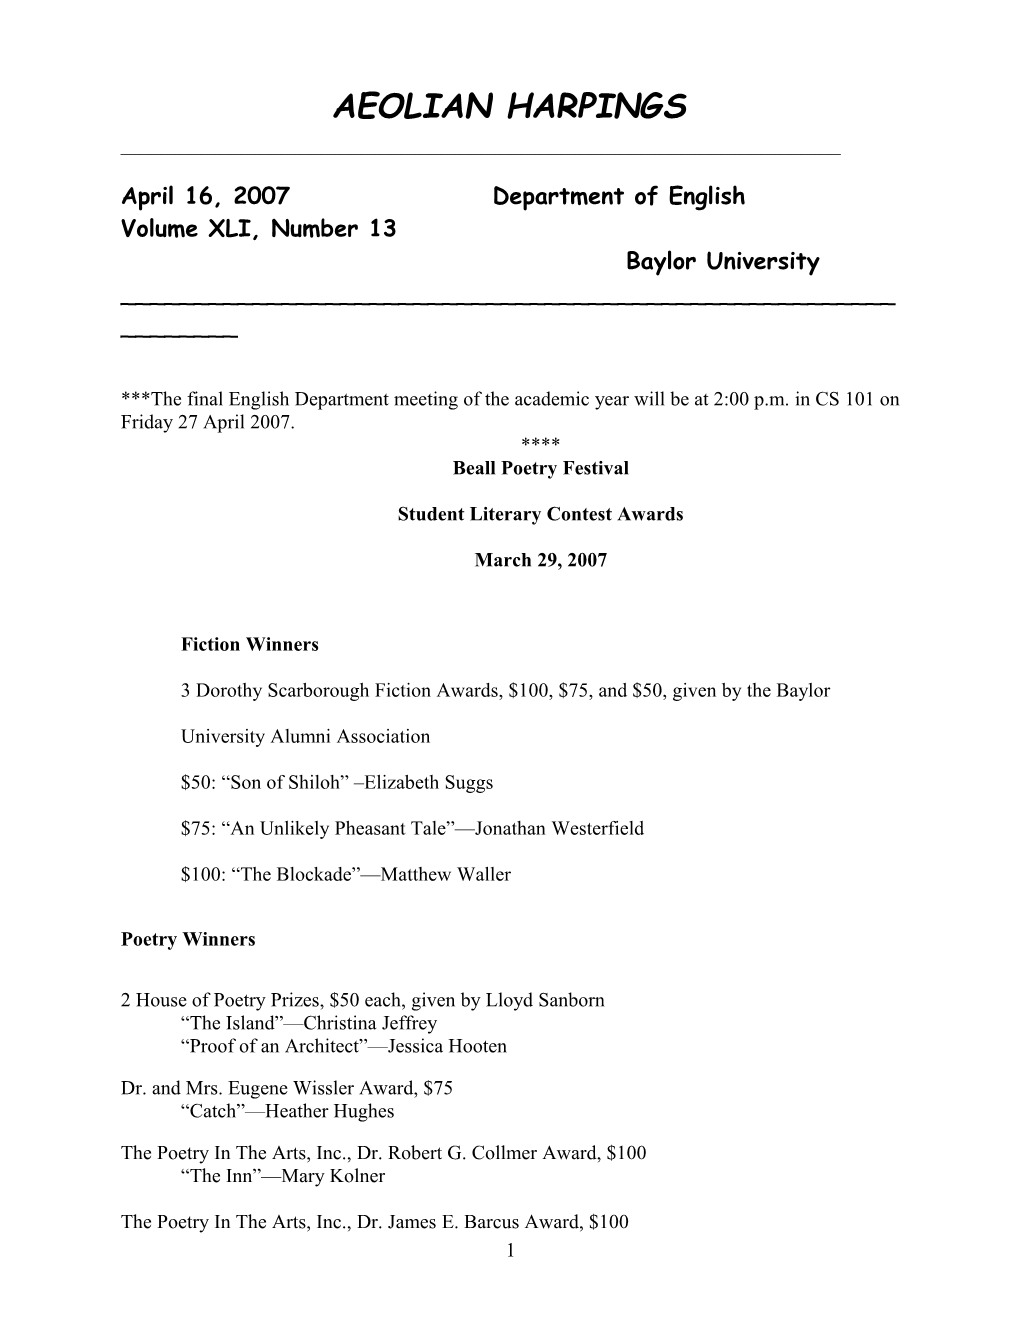 April 16, 2007 Department of English Volume XLI, Number 13